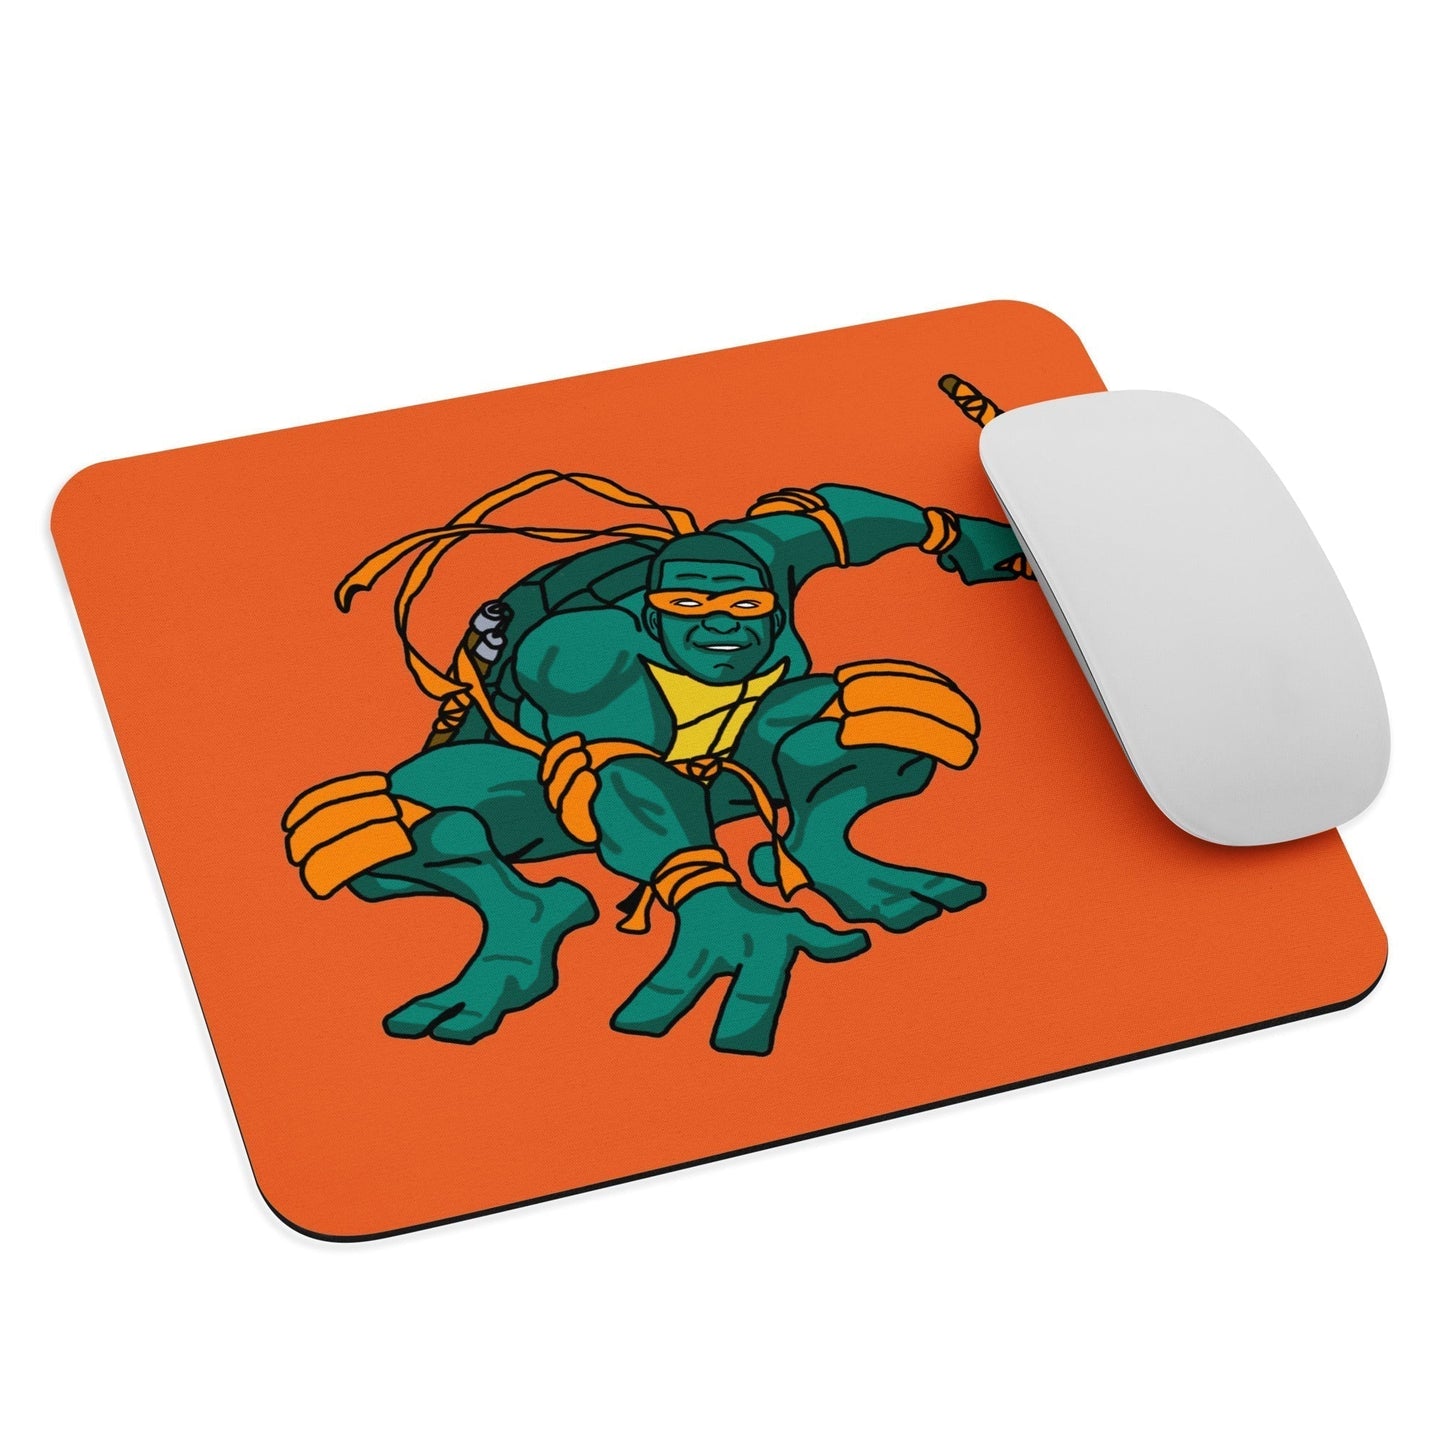 Kylian Mbappe Orange Ninja Turtle Michelangelo Mouse pad Next Cult Brand Football, Kylian Mbappe, Michelangelo, Ninja Turtles, PSG